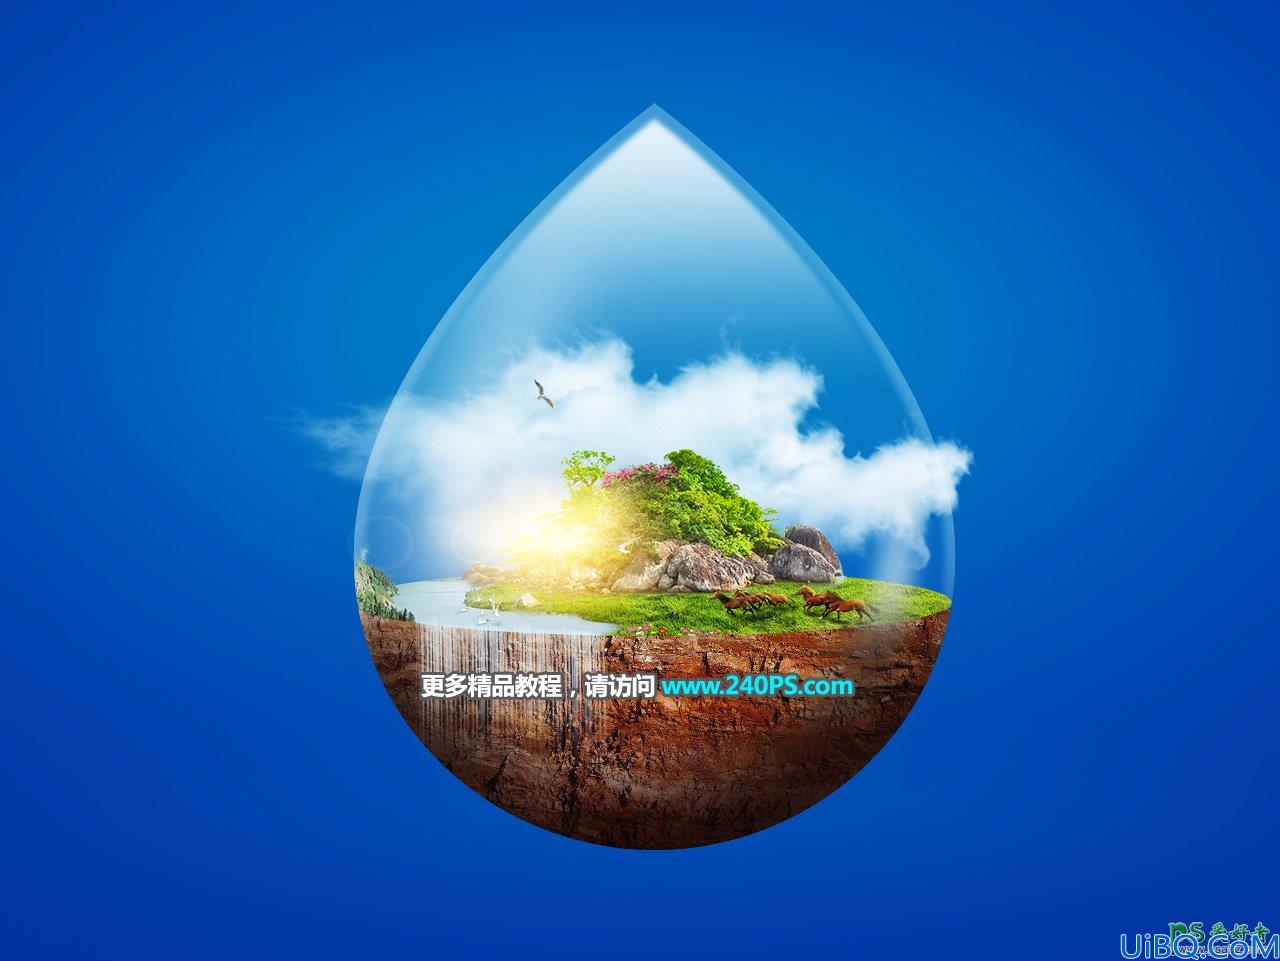 Photoshop图像合成实例：把一幅生态环境景观图片合成到透明水滴素材图中